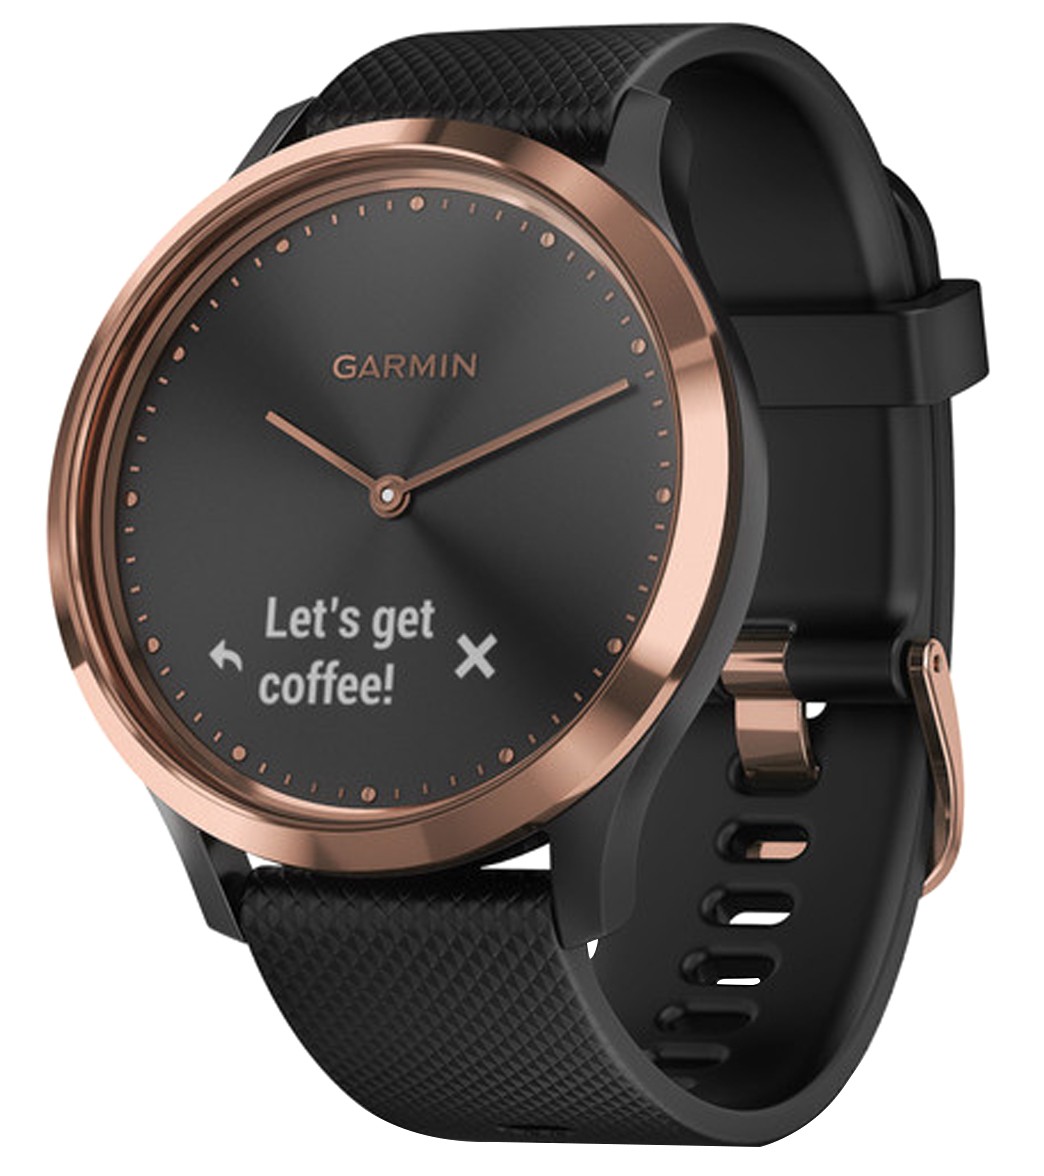 Garmin Vivomove HR Hybrid Smart Watch at SwimOutlet.com - Free Shipping